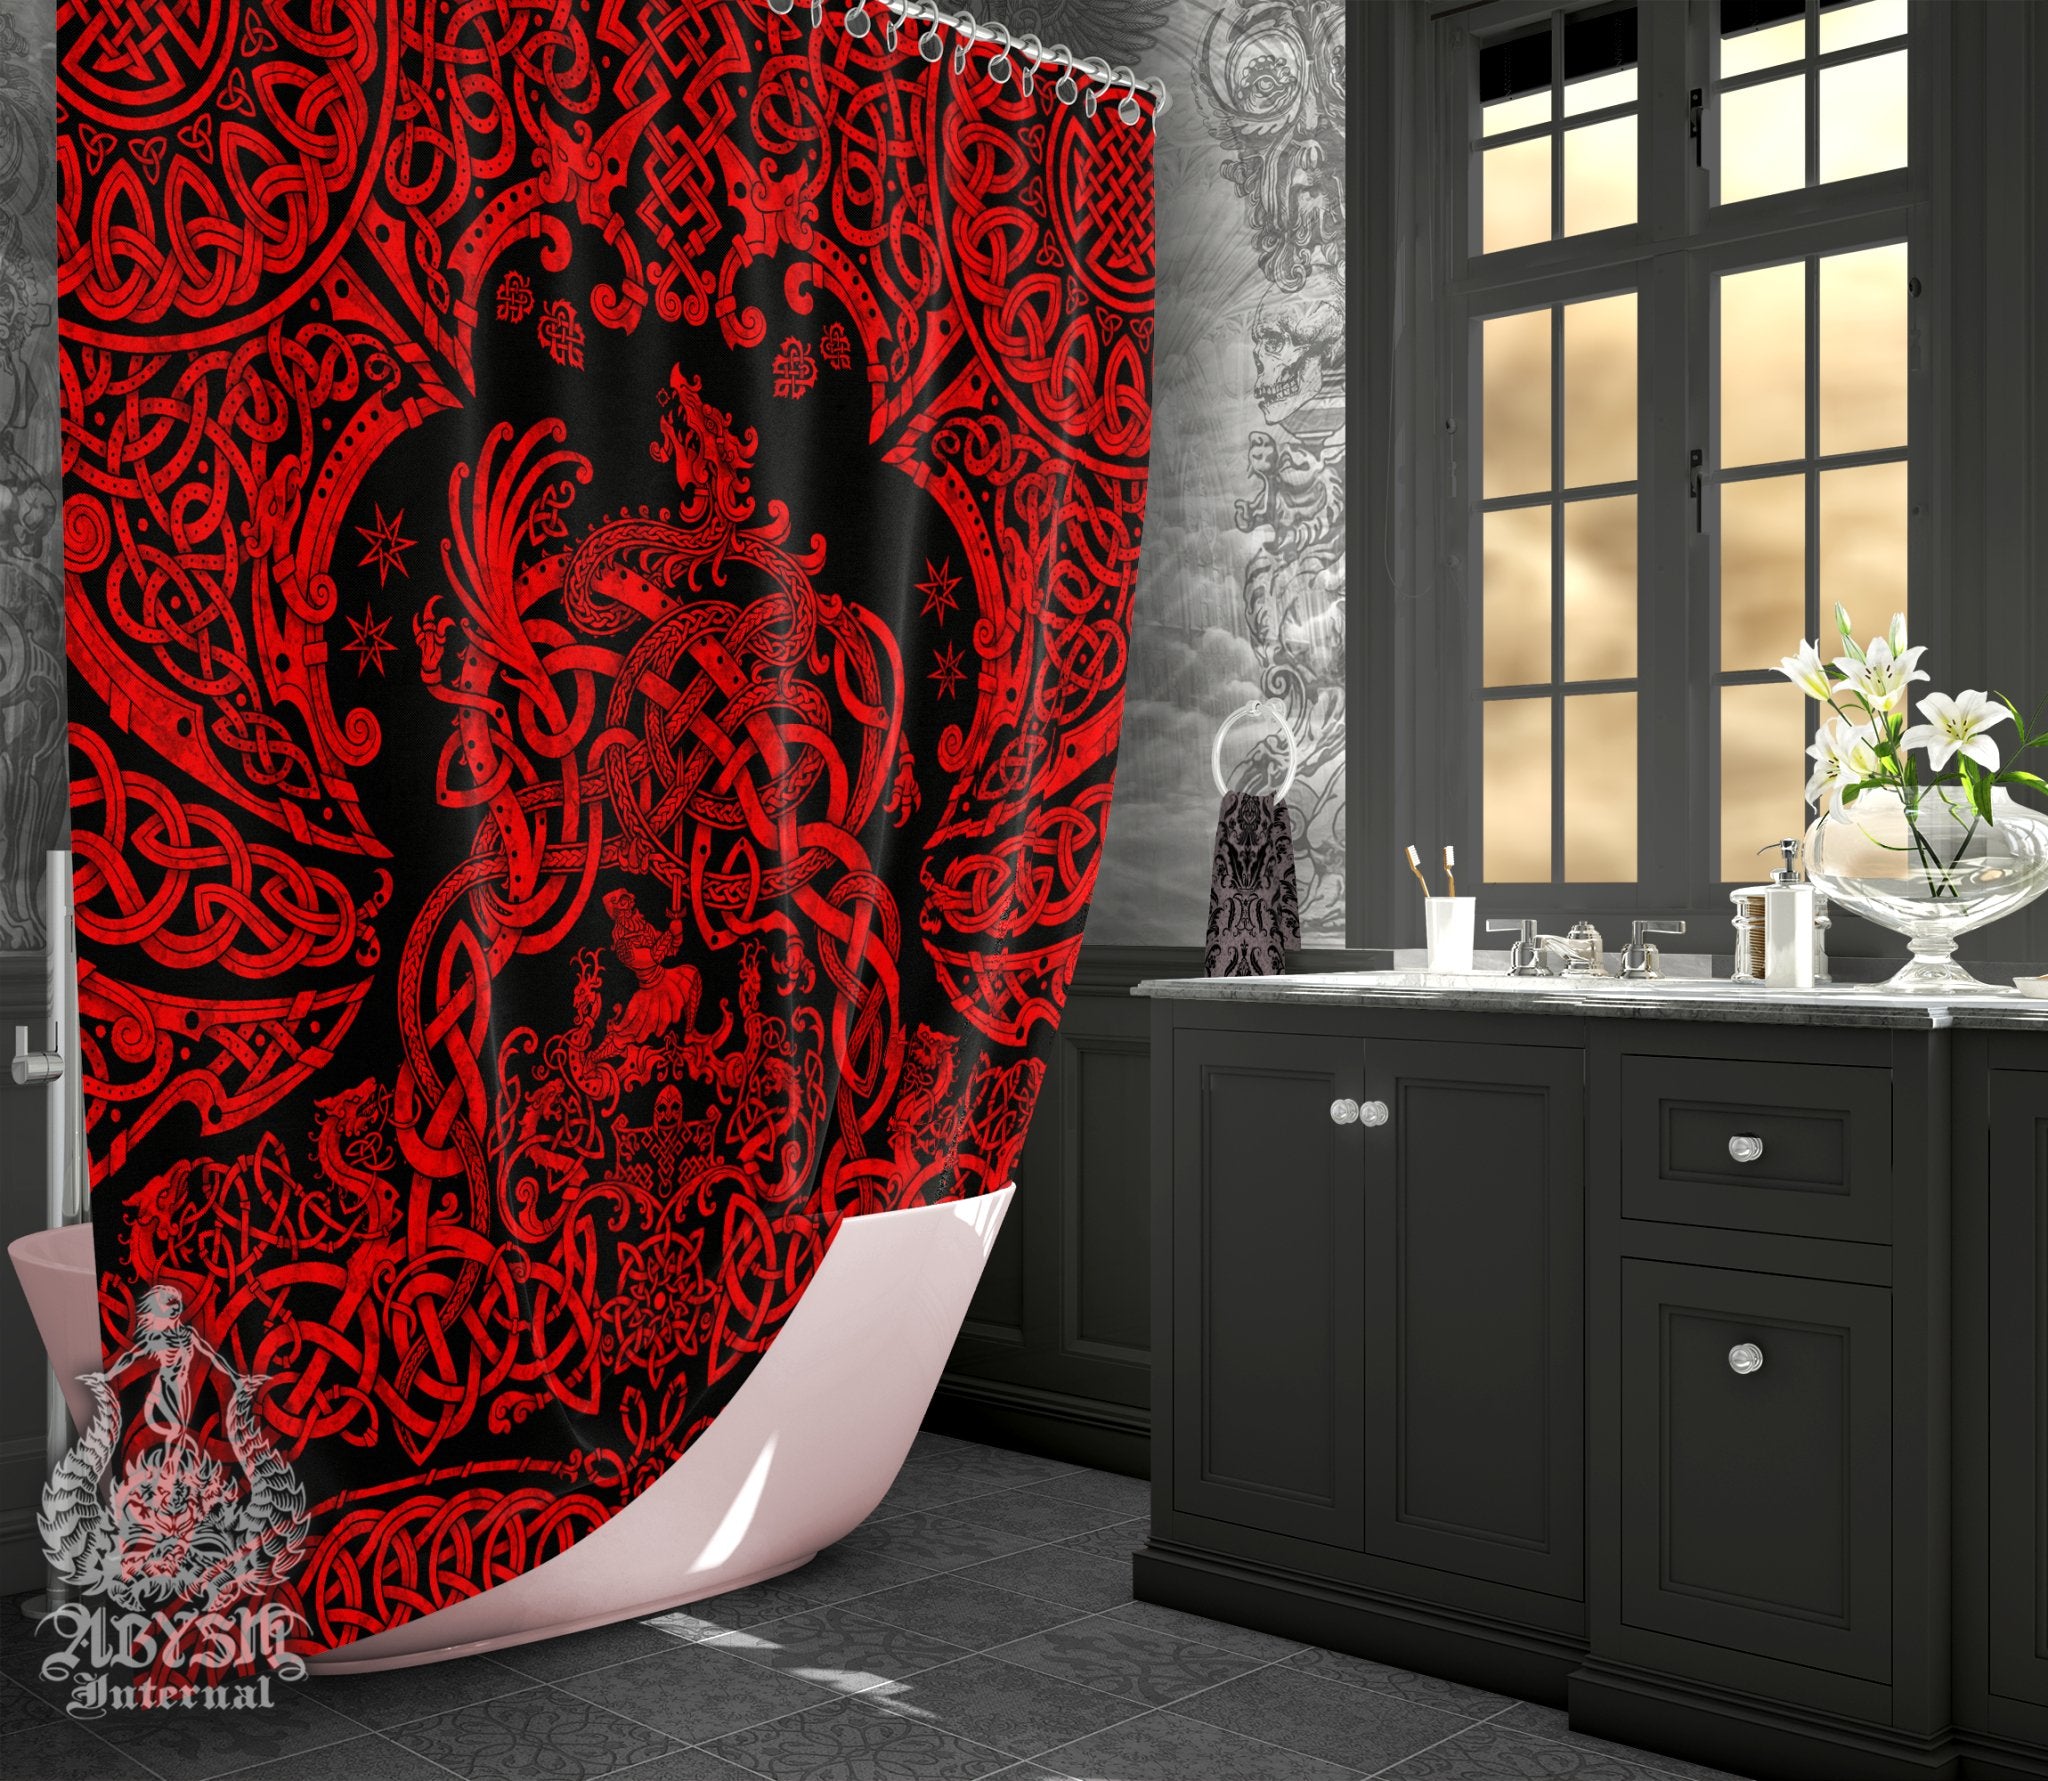 Red and Black Viking Shower Curtain, 71x74 inches, Norse Art Bathroom Decor, Nordic Dragon Fafnir - Abysm Internal